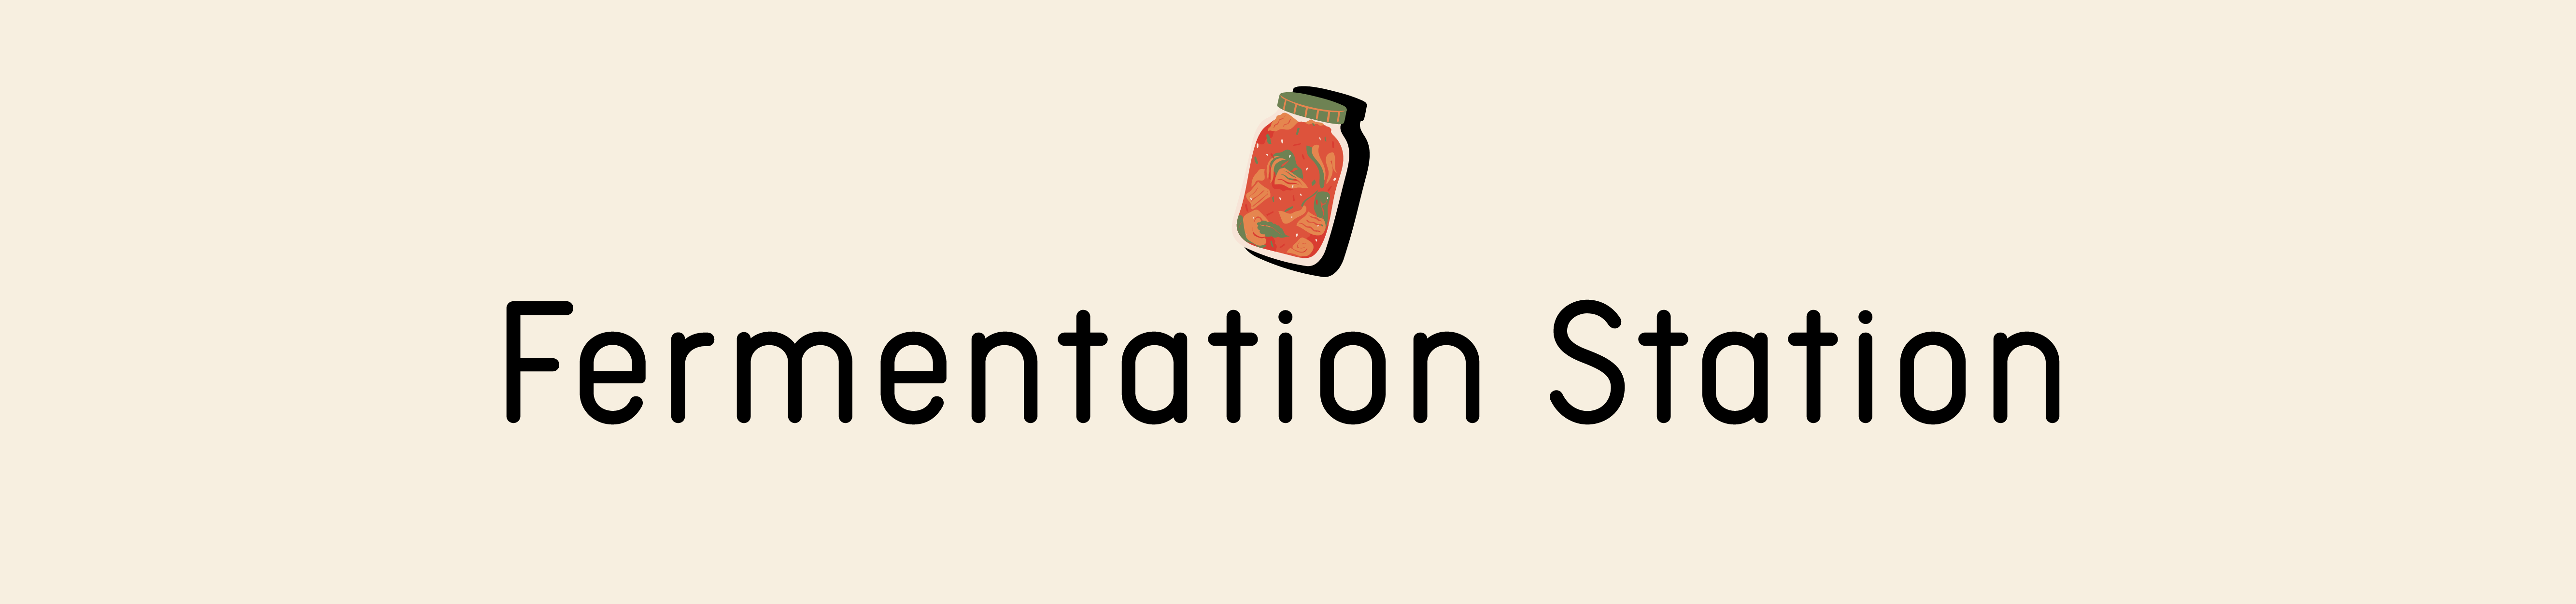 Fermentation Station header